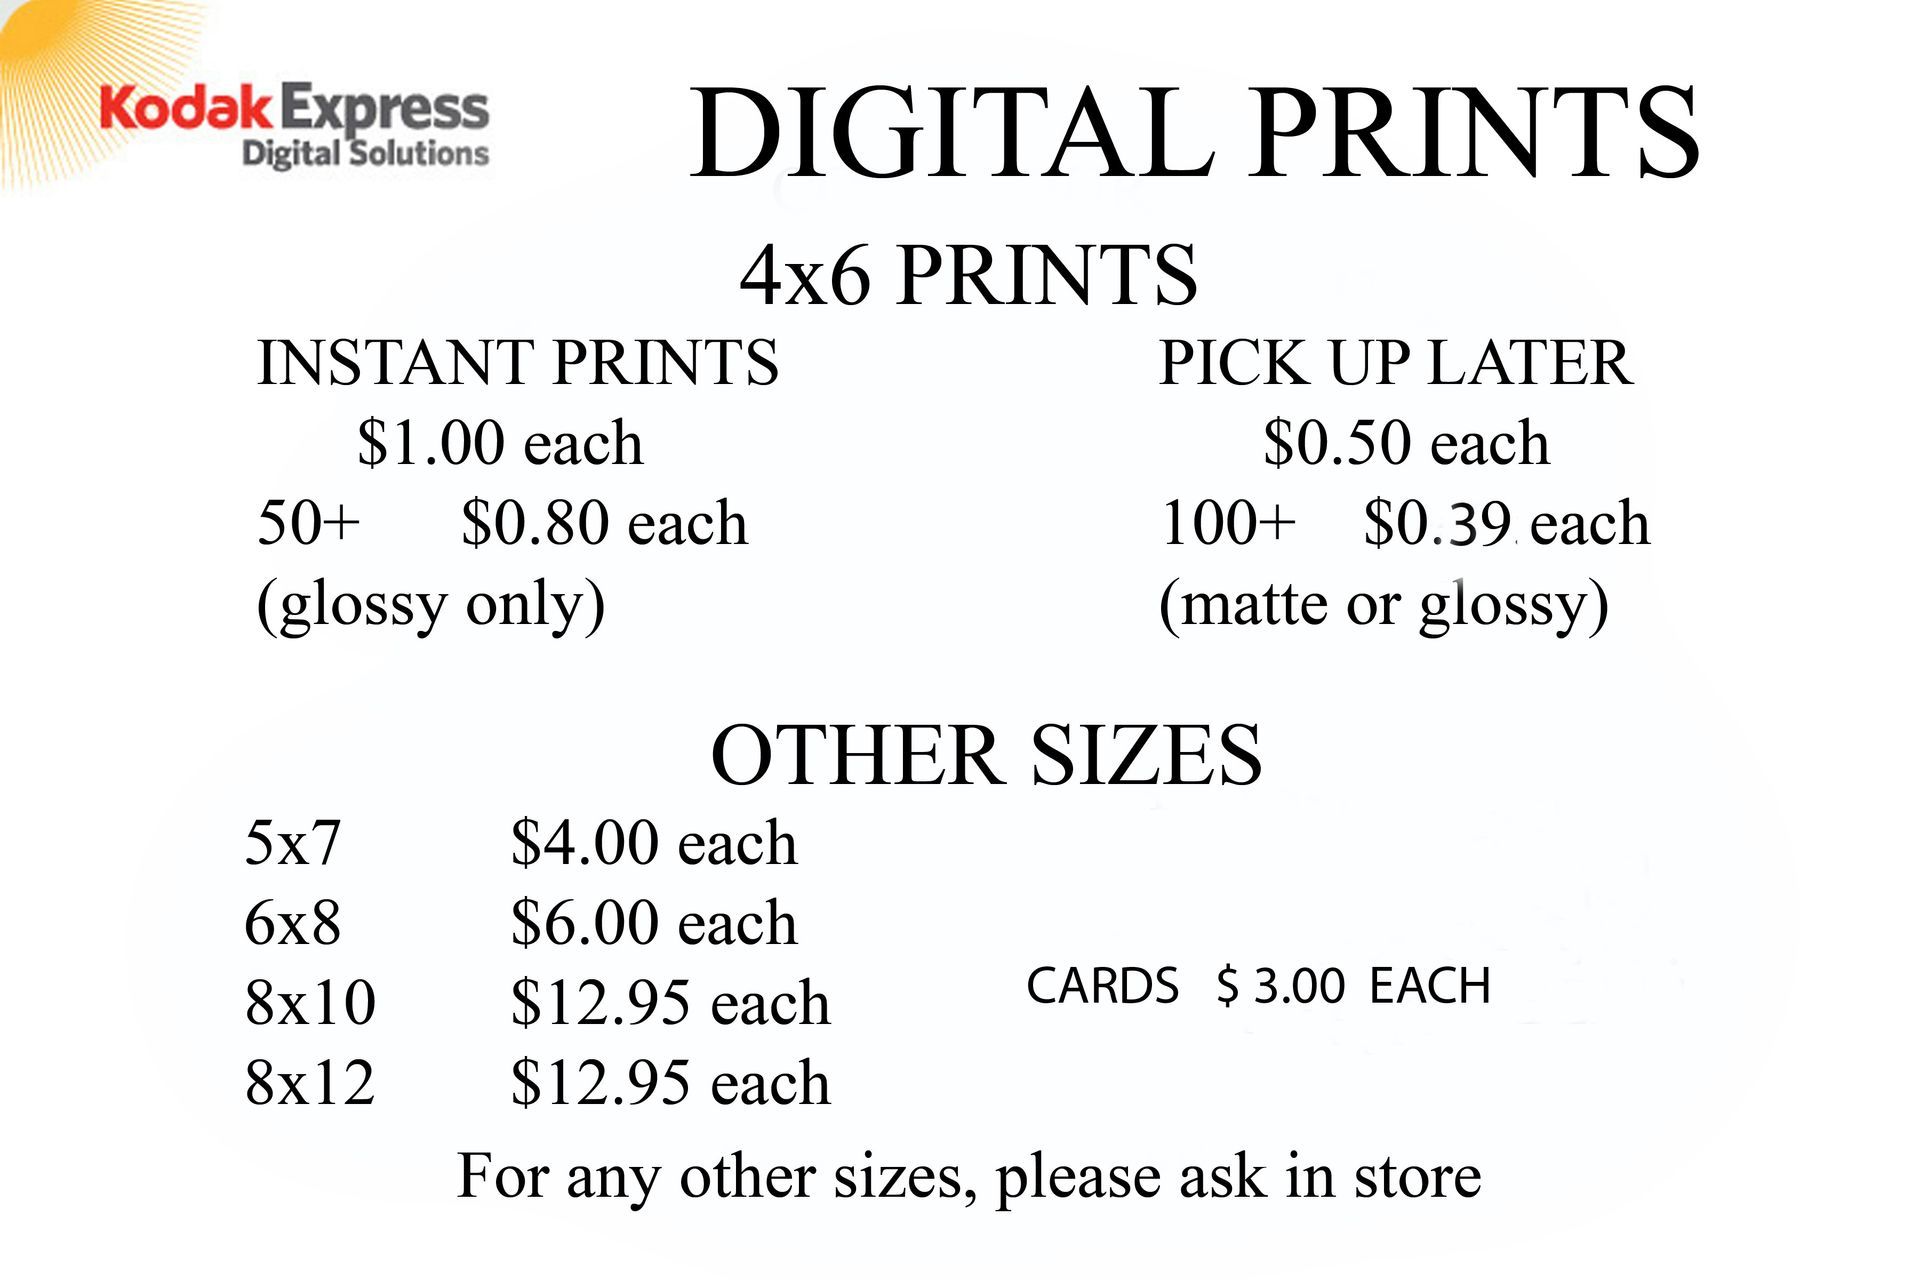 Kodak Express Digital Solutions' rate list for Digital Prints